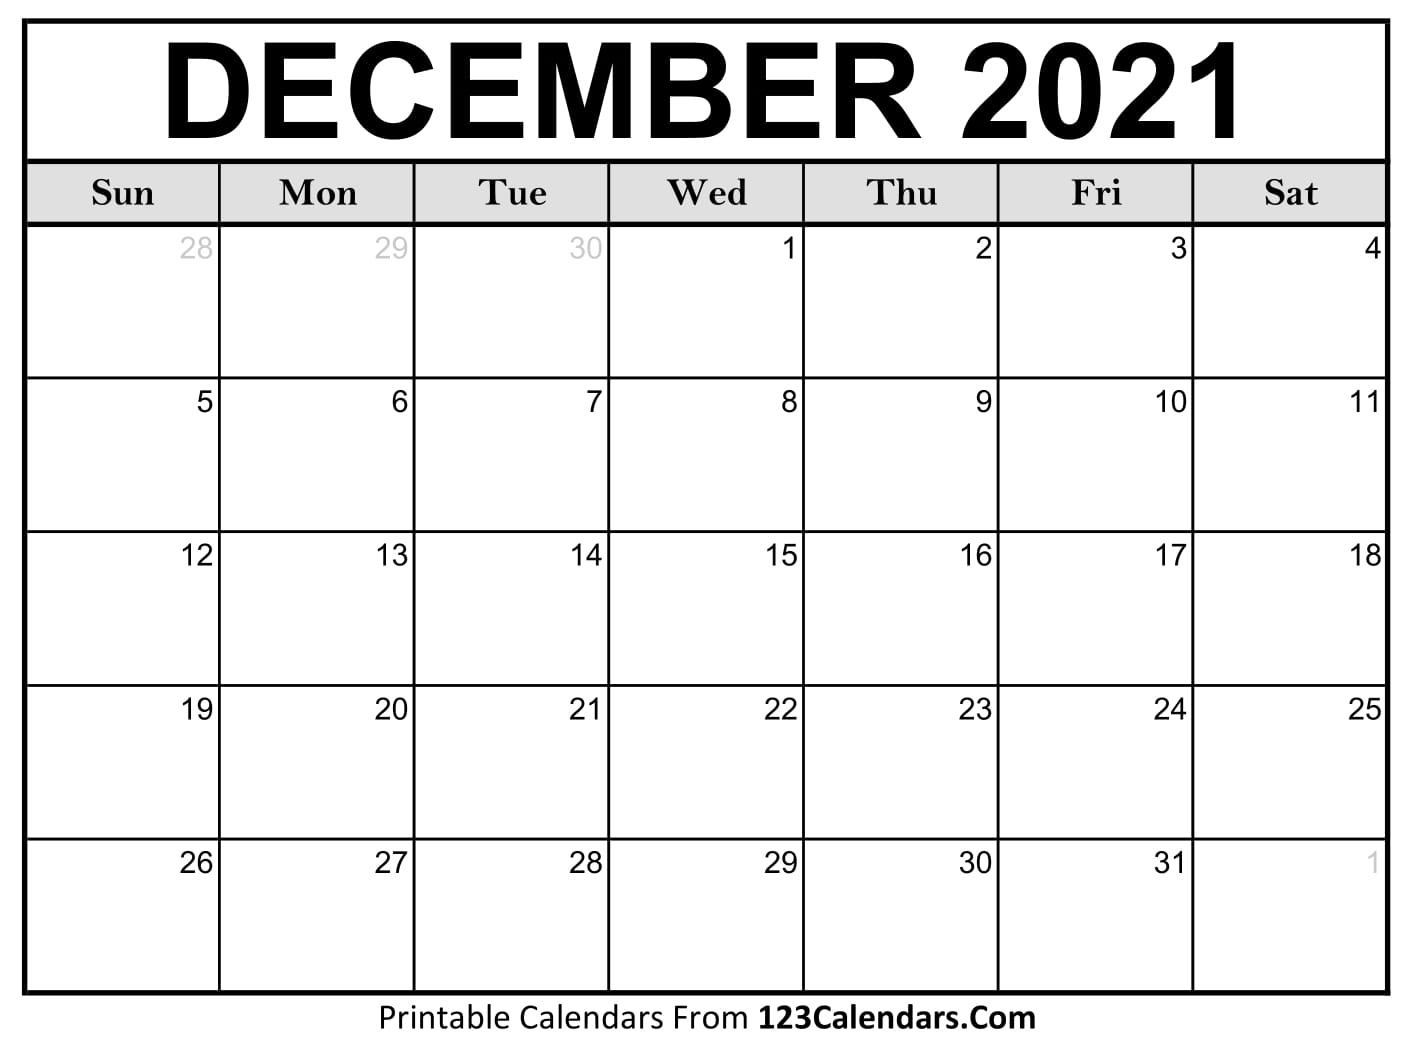 Printable December 2021 Calendar Templates - 123Calendars December 2021 Day Calendar